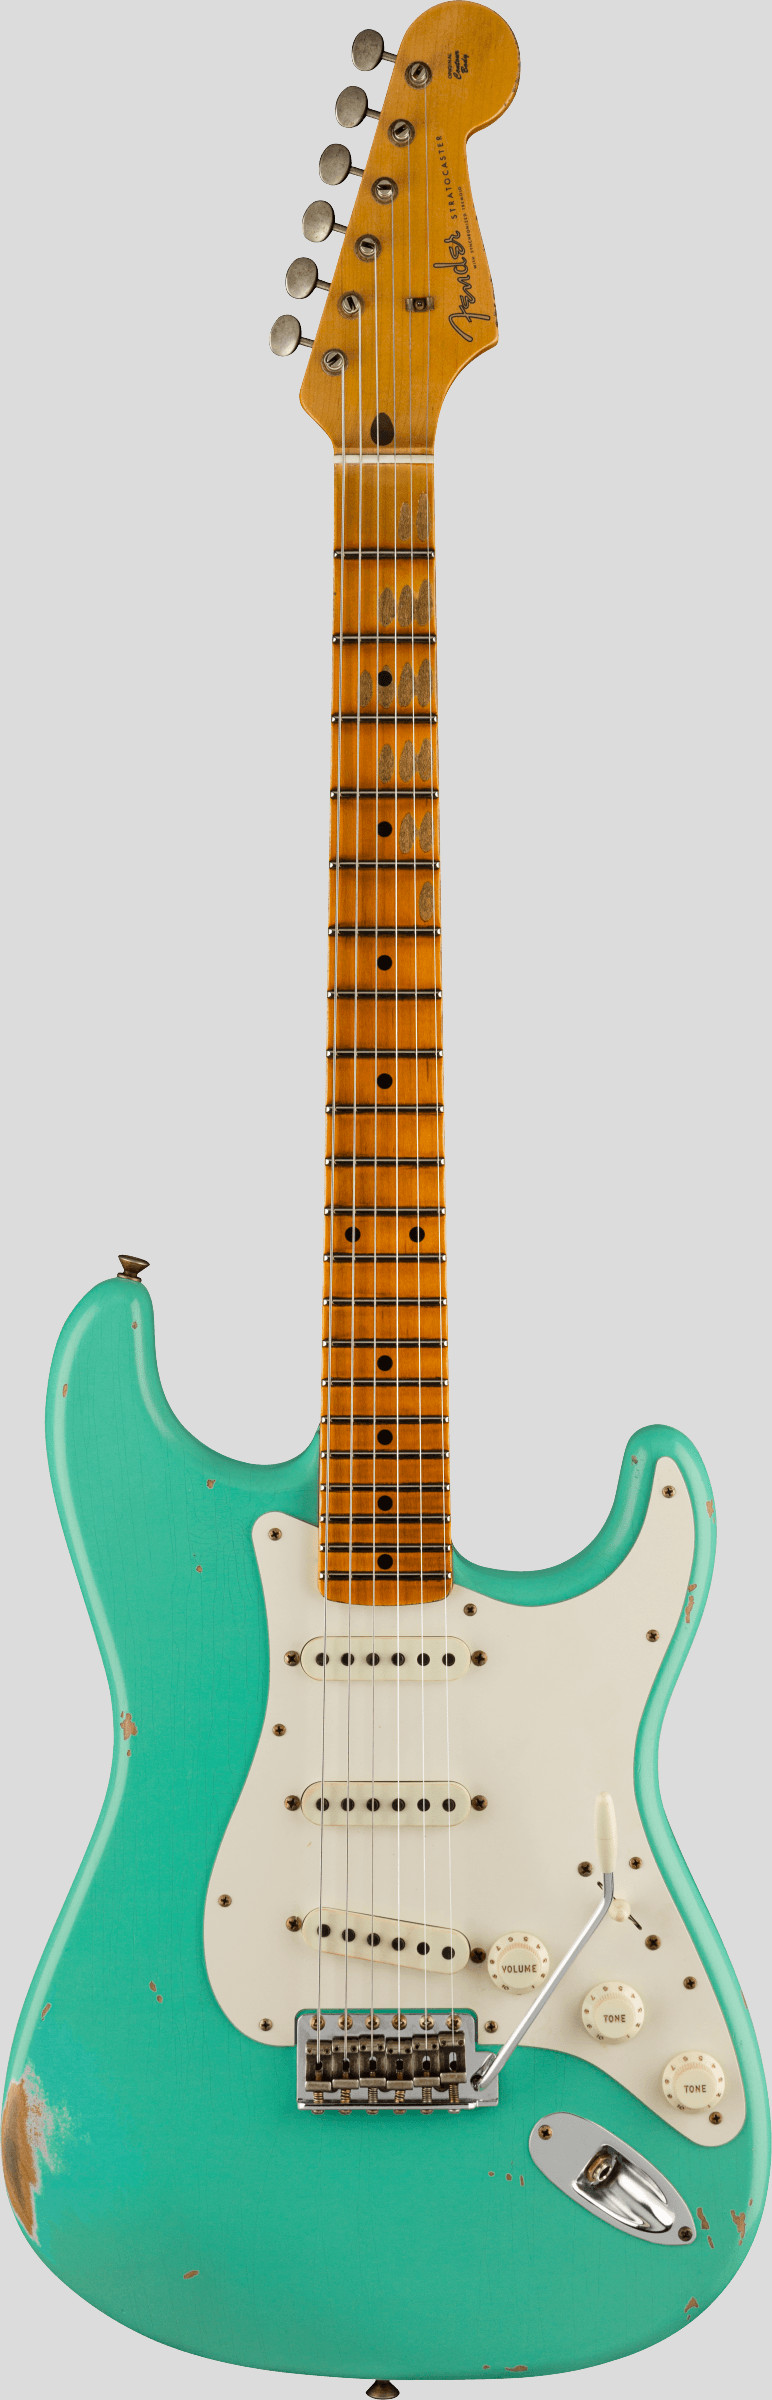 Fender Custom Shop Limited Edition Fat 50 Stratocaster Super Faded Aged Seafoam Green Relic 1